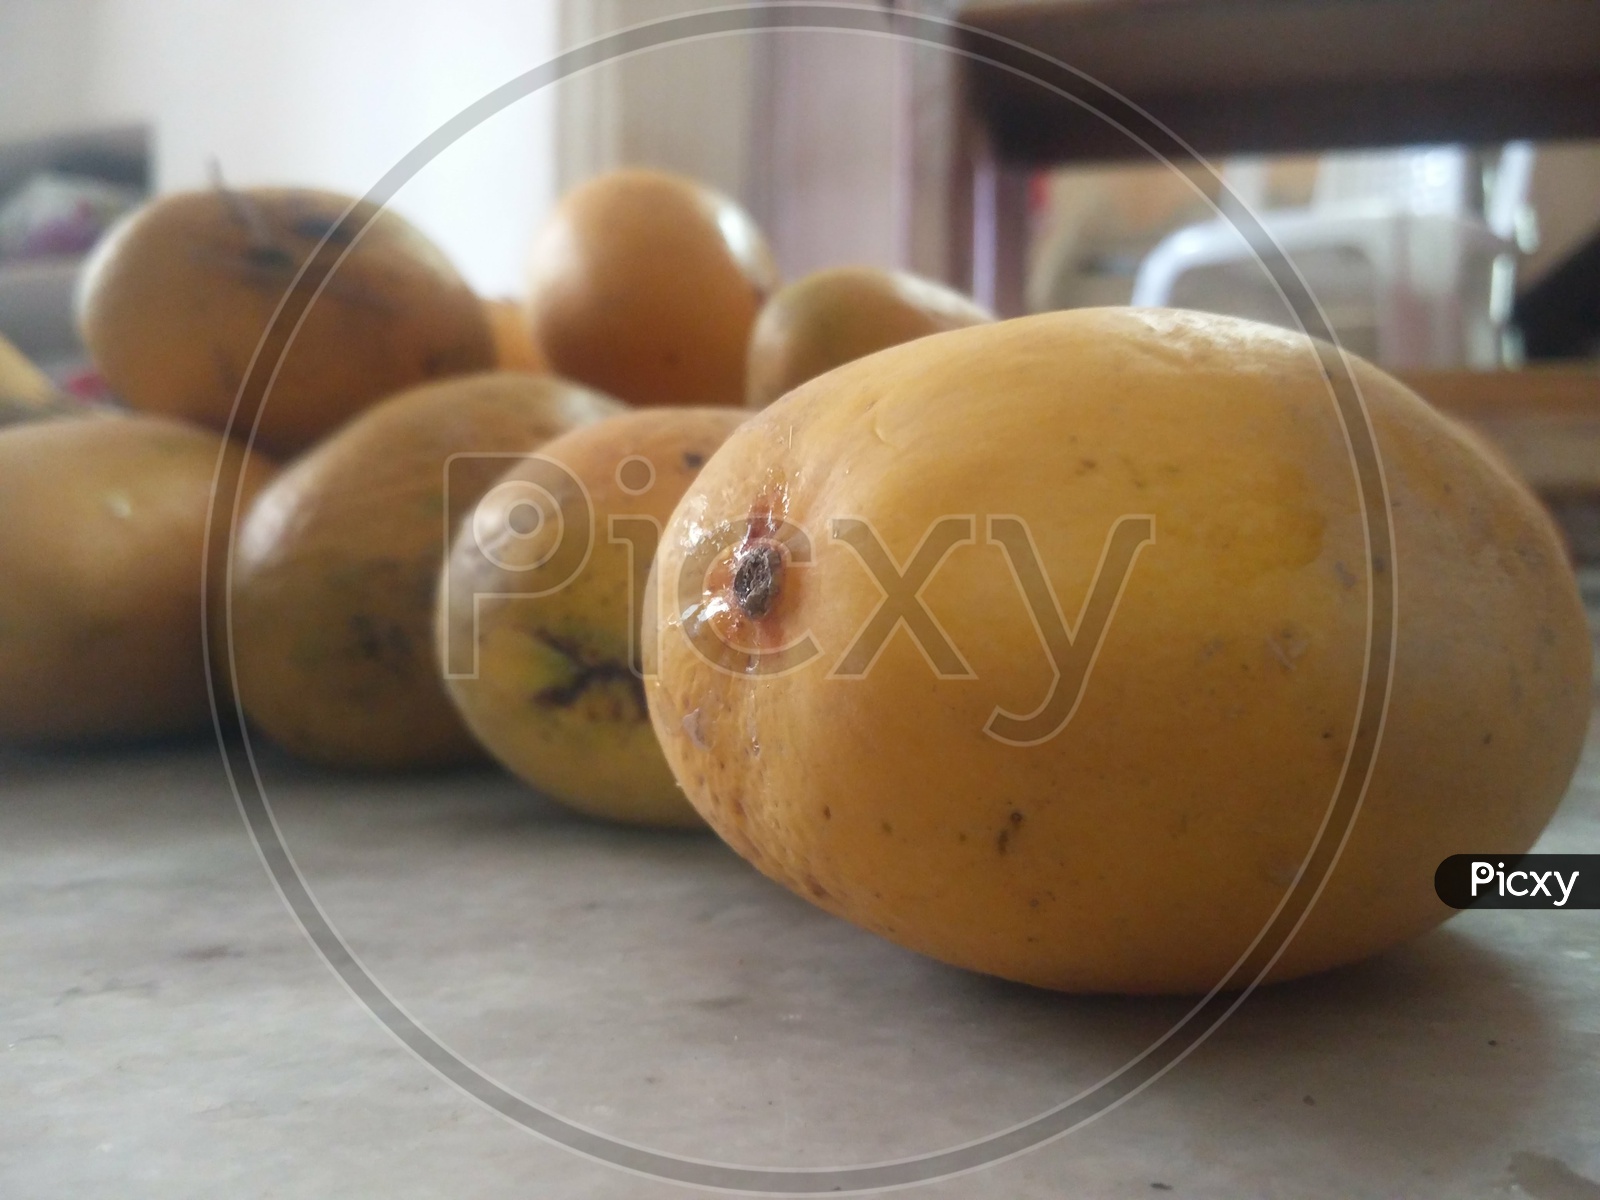 Closeup Shot of Mangoes